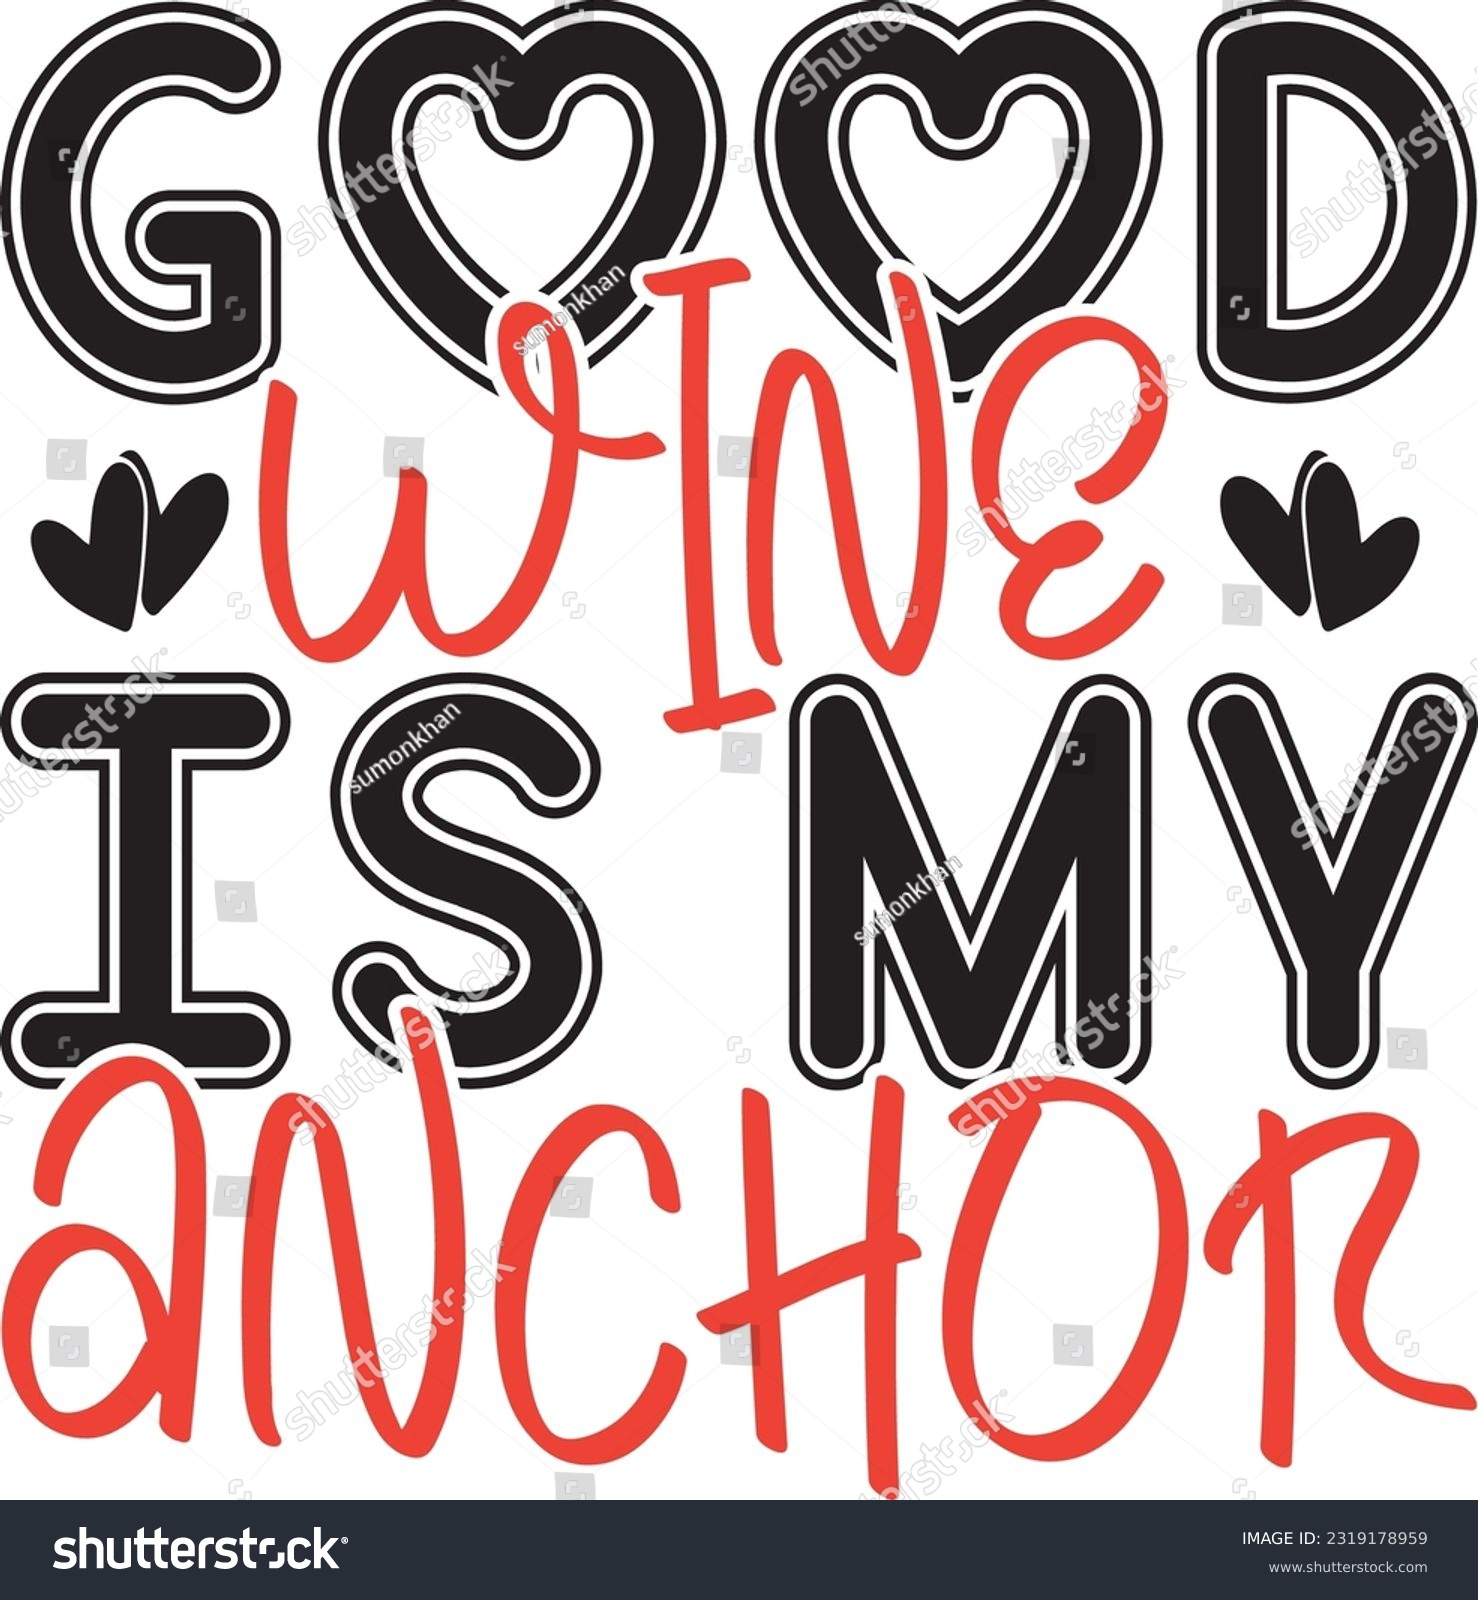 SVG of Good Wine is My Anchor; The Best Seller SVG Design svg